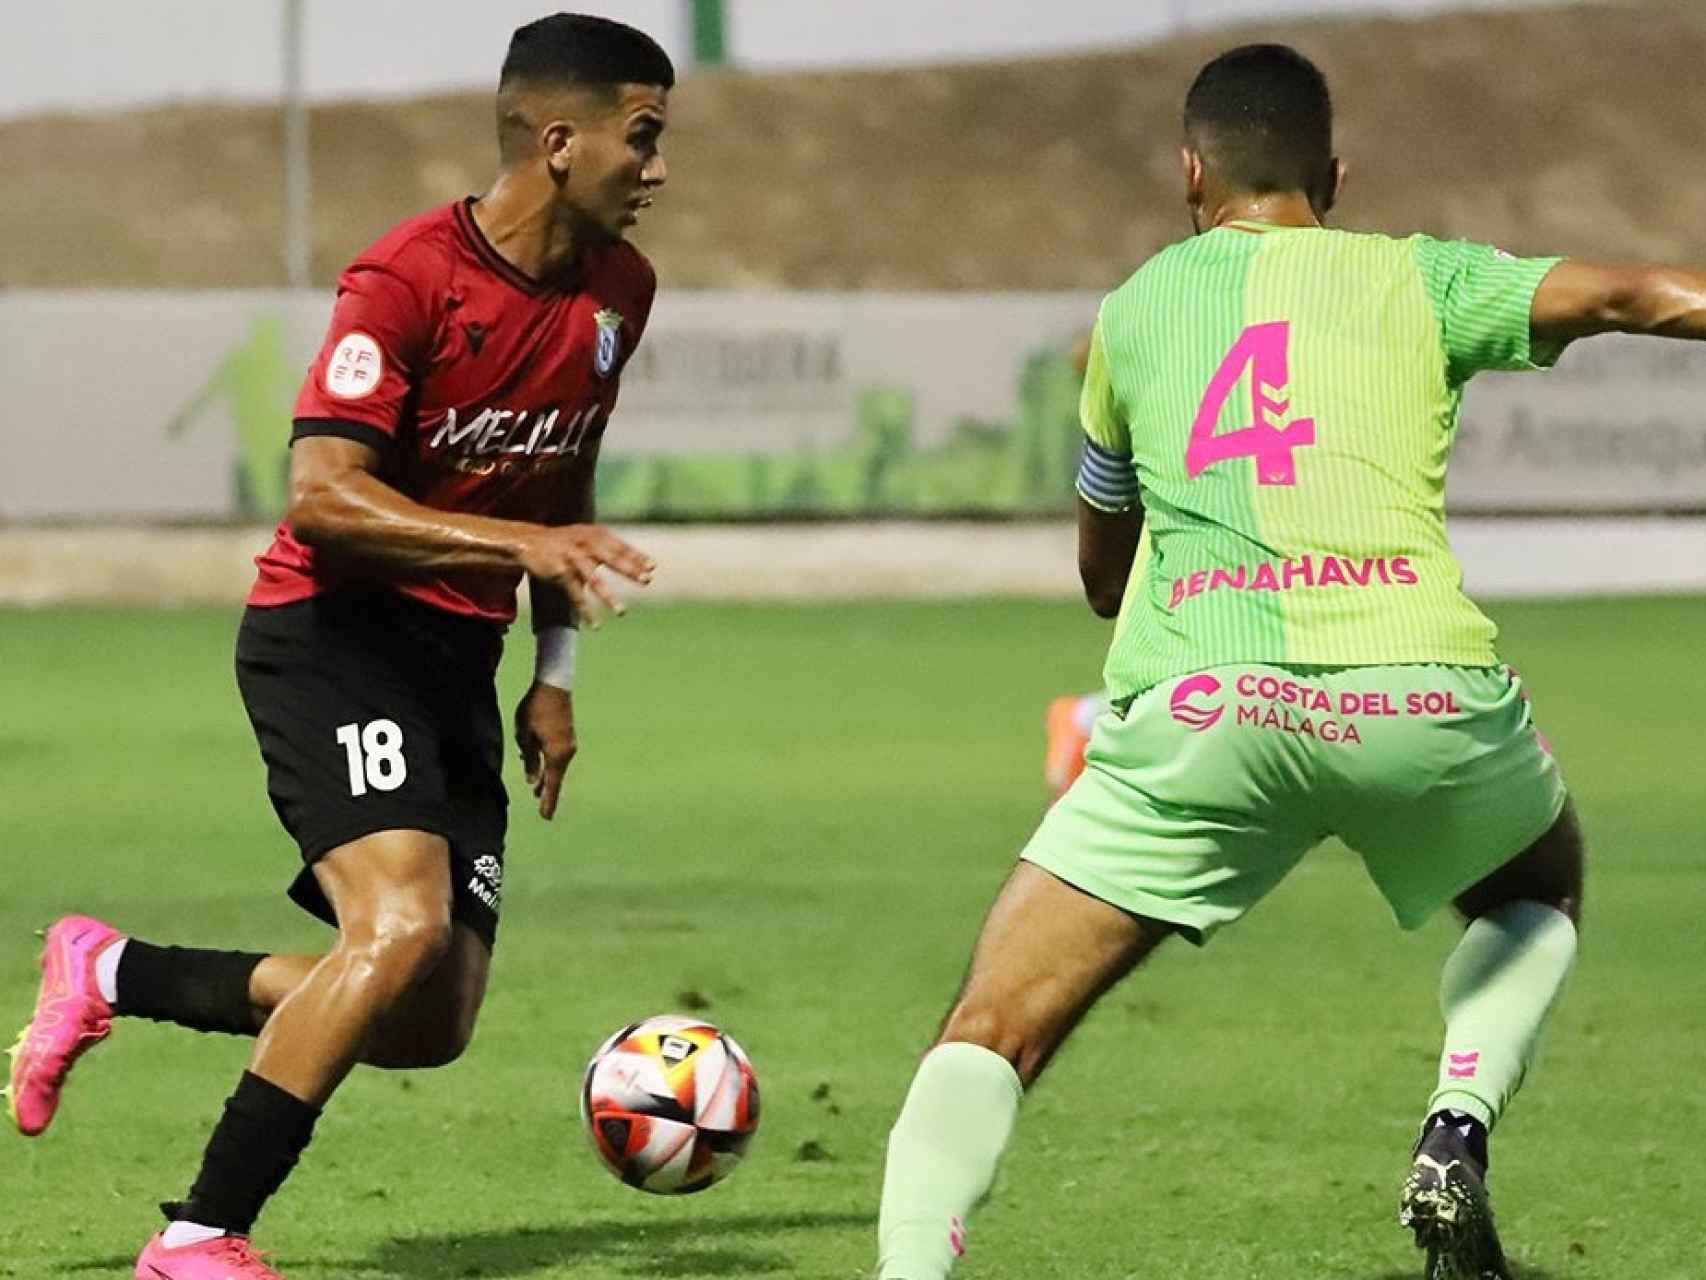 Dos jugadores del Melilla celebran un gol simulando esnifar cocaína